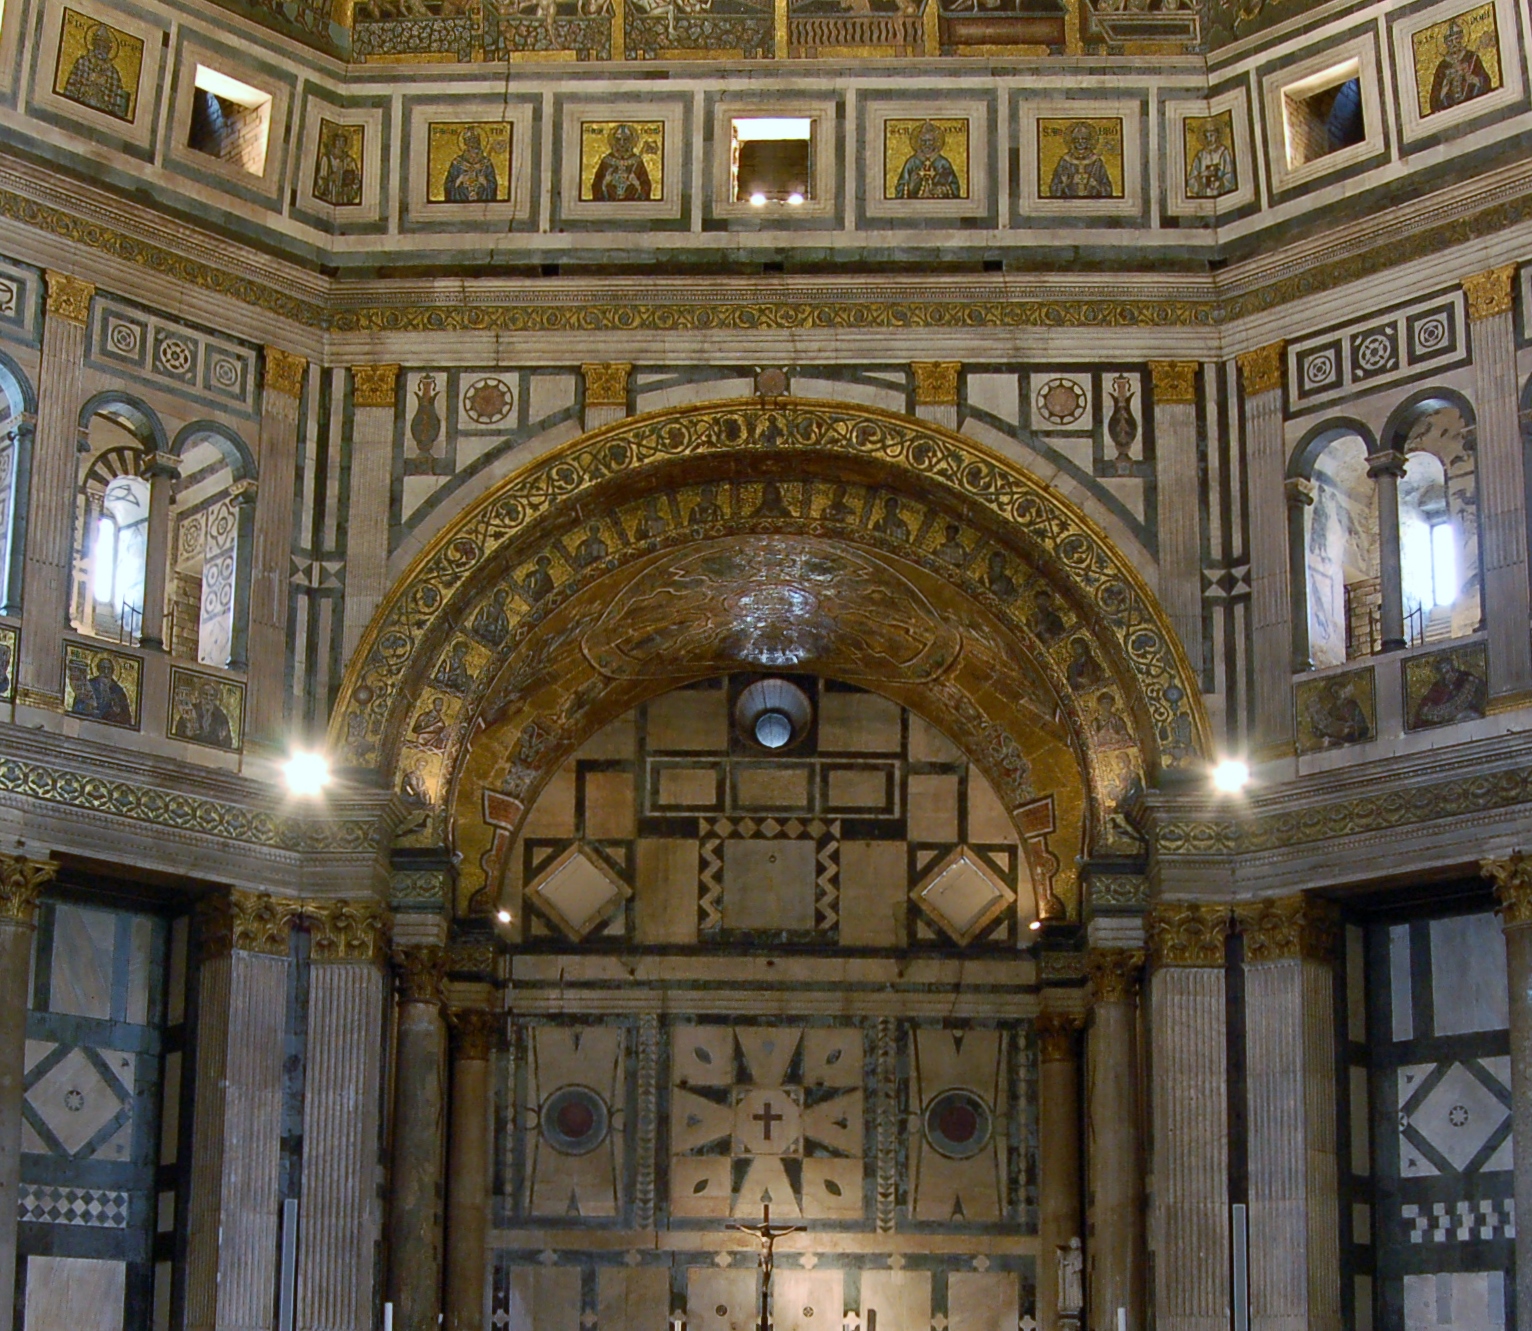 The Baptistery of Saint John, patron saint of Florence